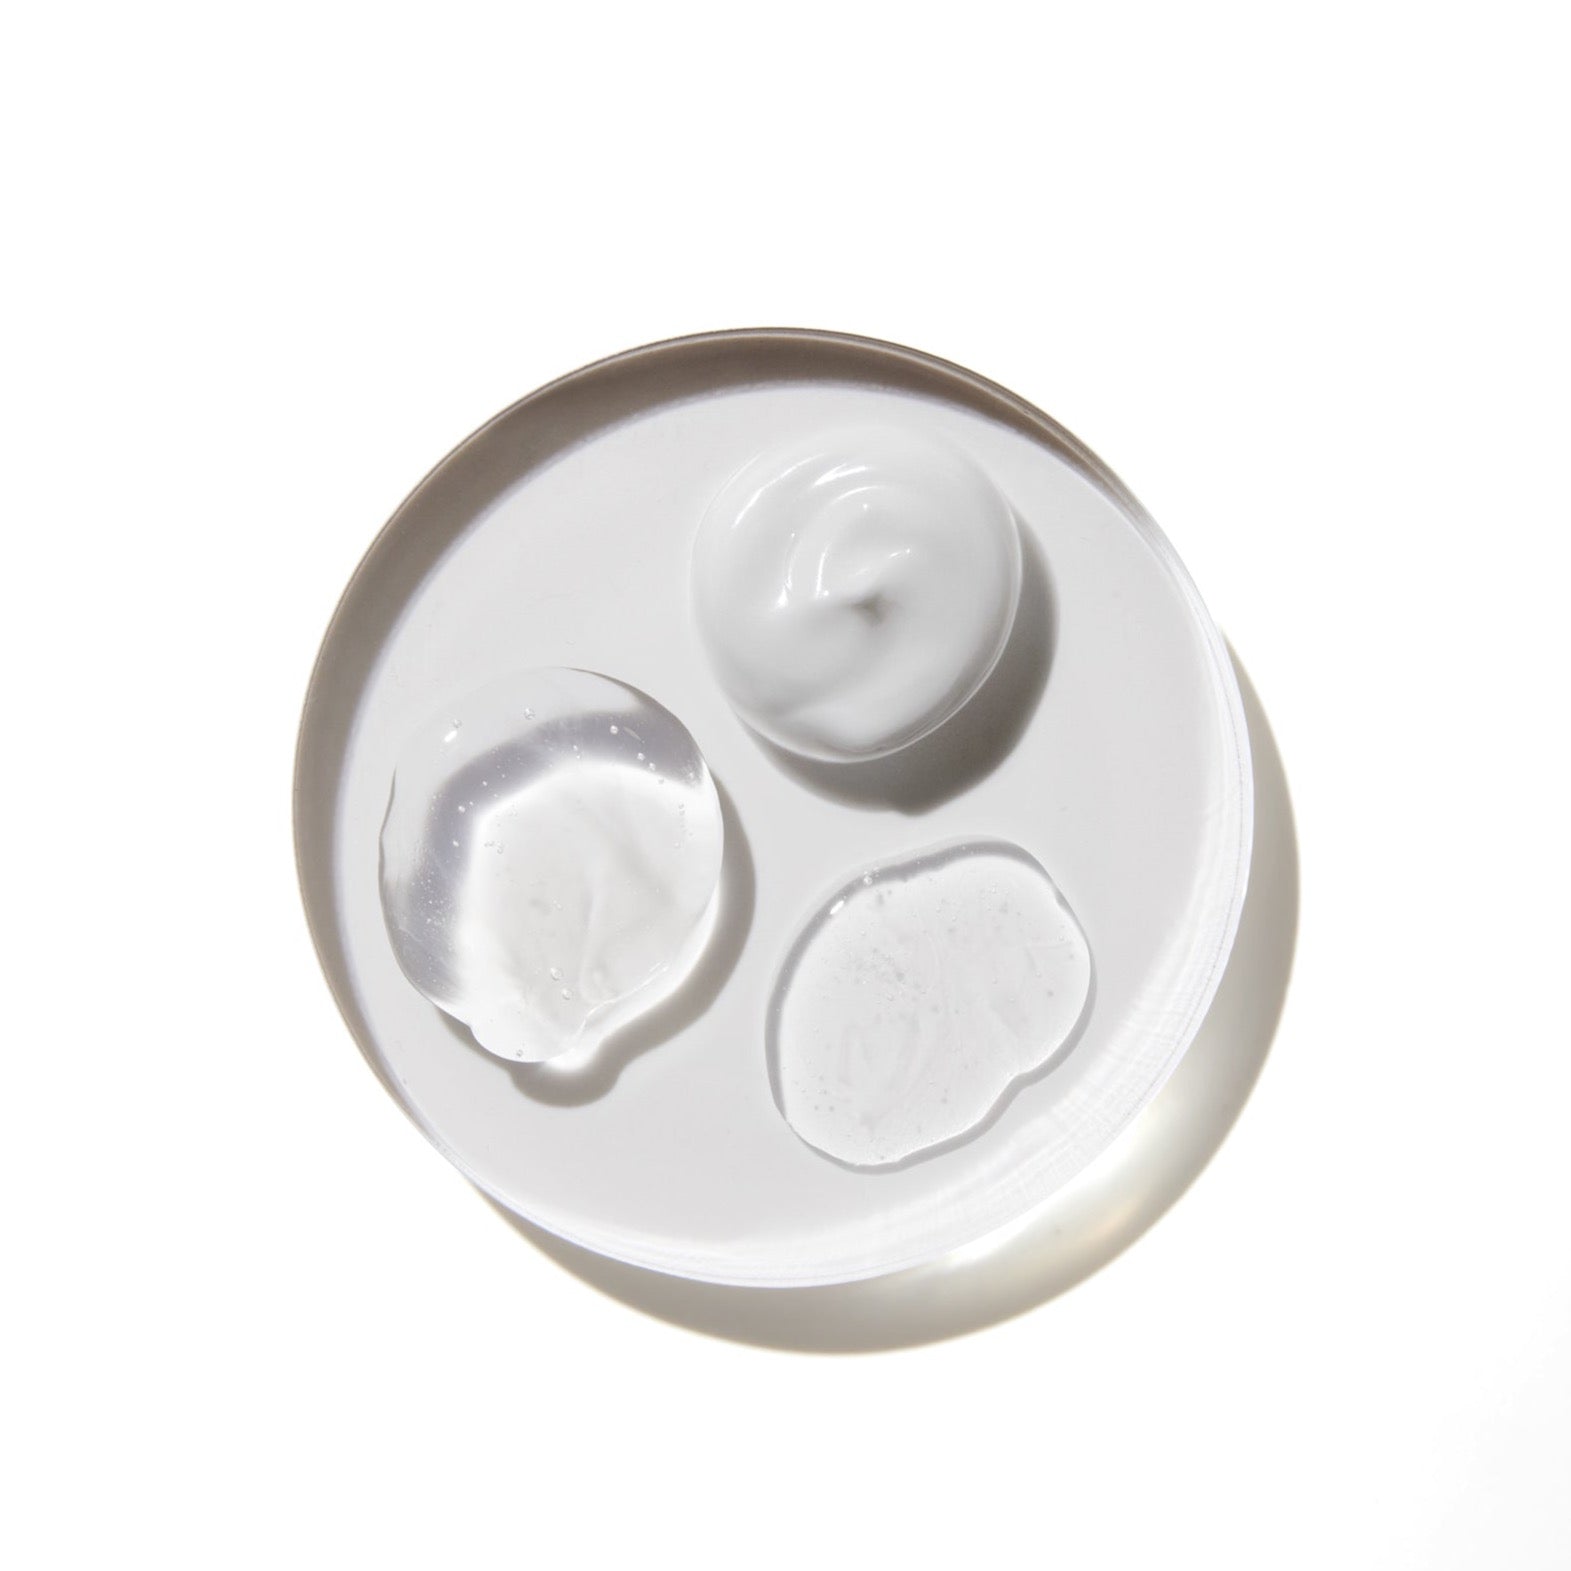 Comune Essentials Face Cleanser + Hydra Shroom Cream + Vita Boost Serum